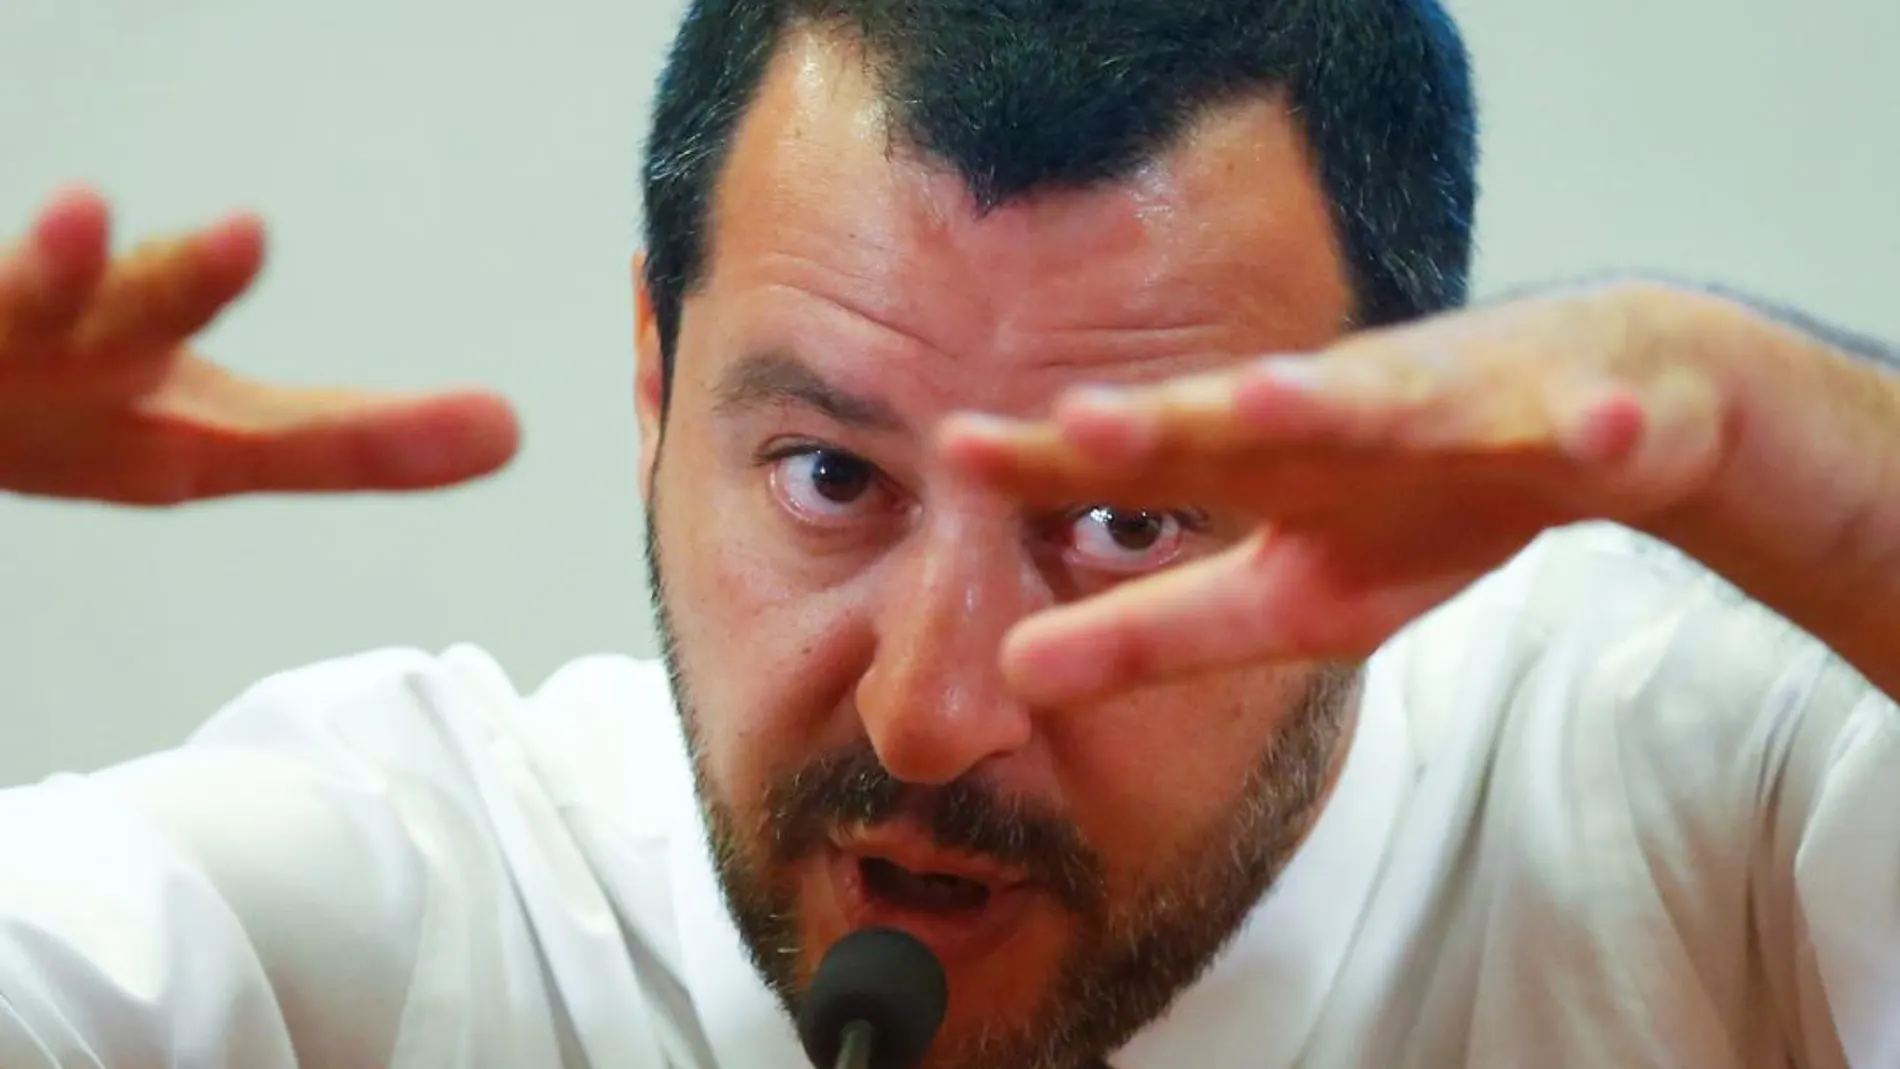 El ministro de Interior de Italia, Matteo Salvini, en una imagen de archivo / Foto: Reuters